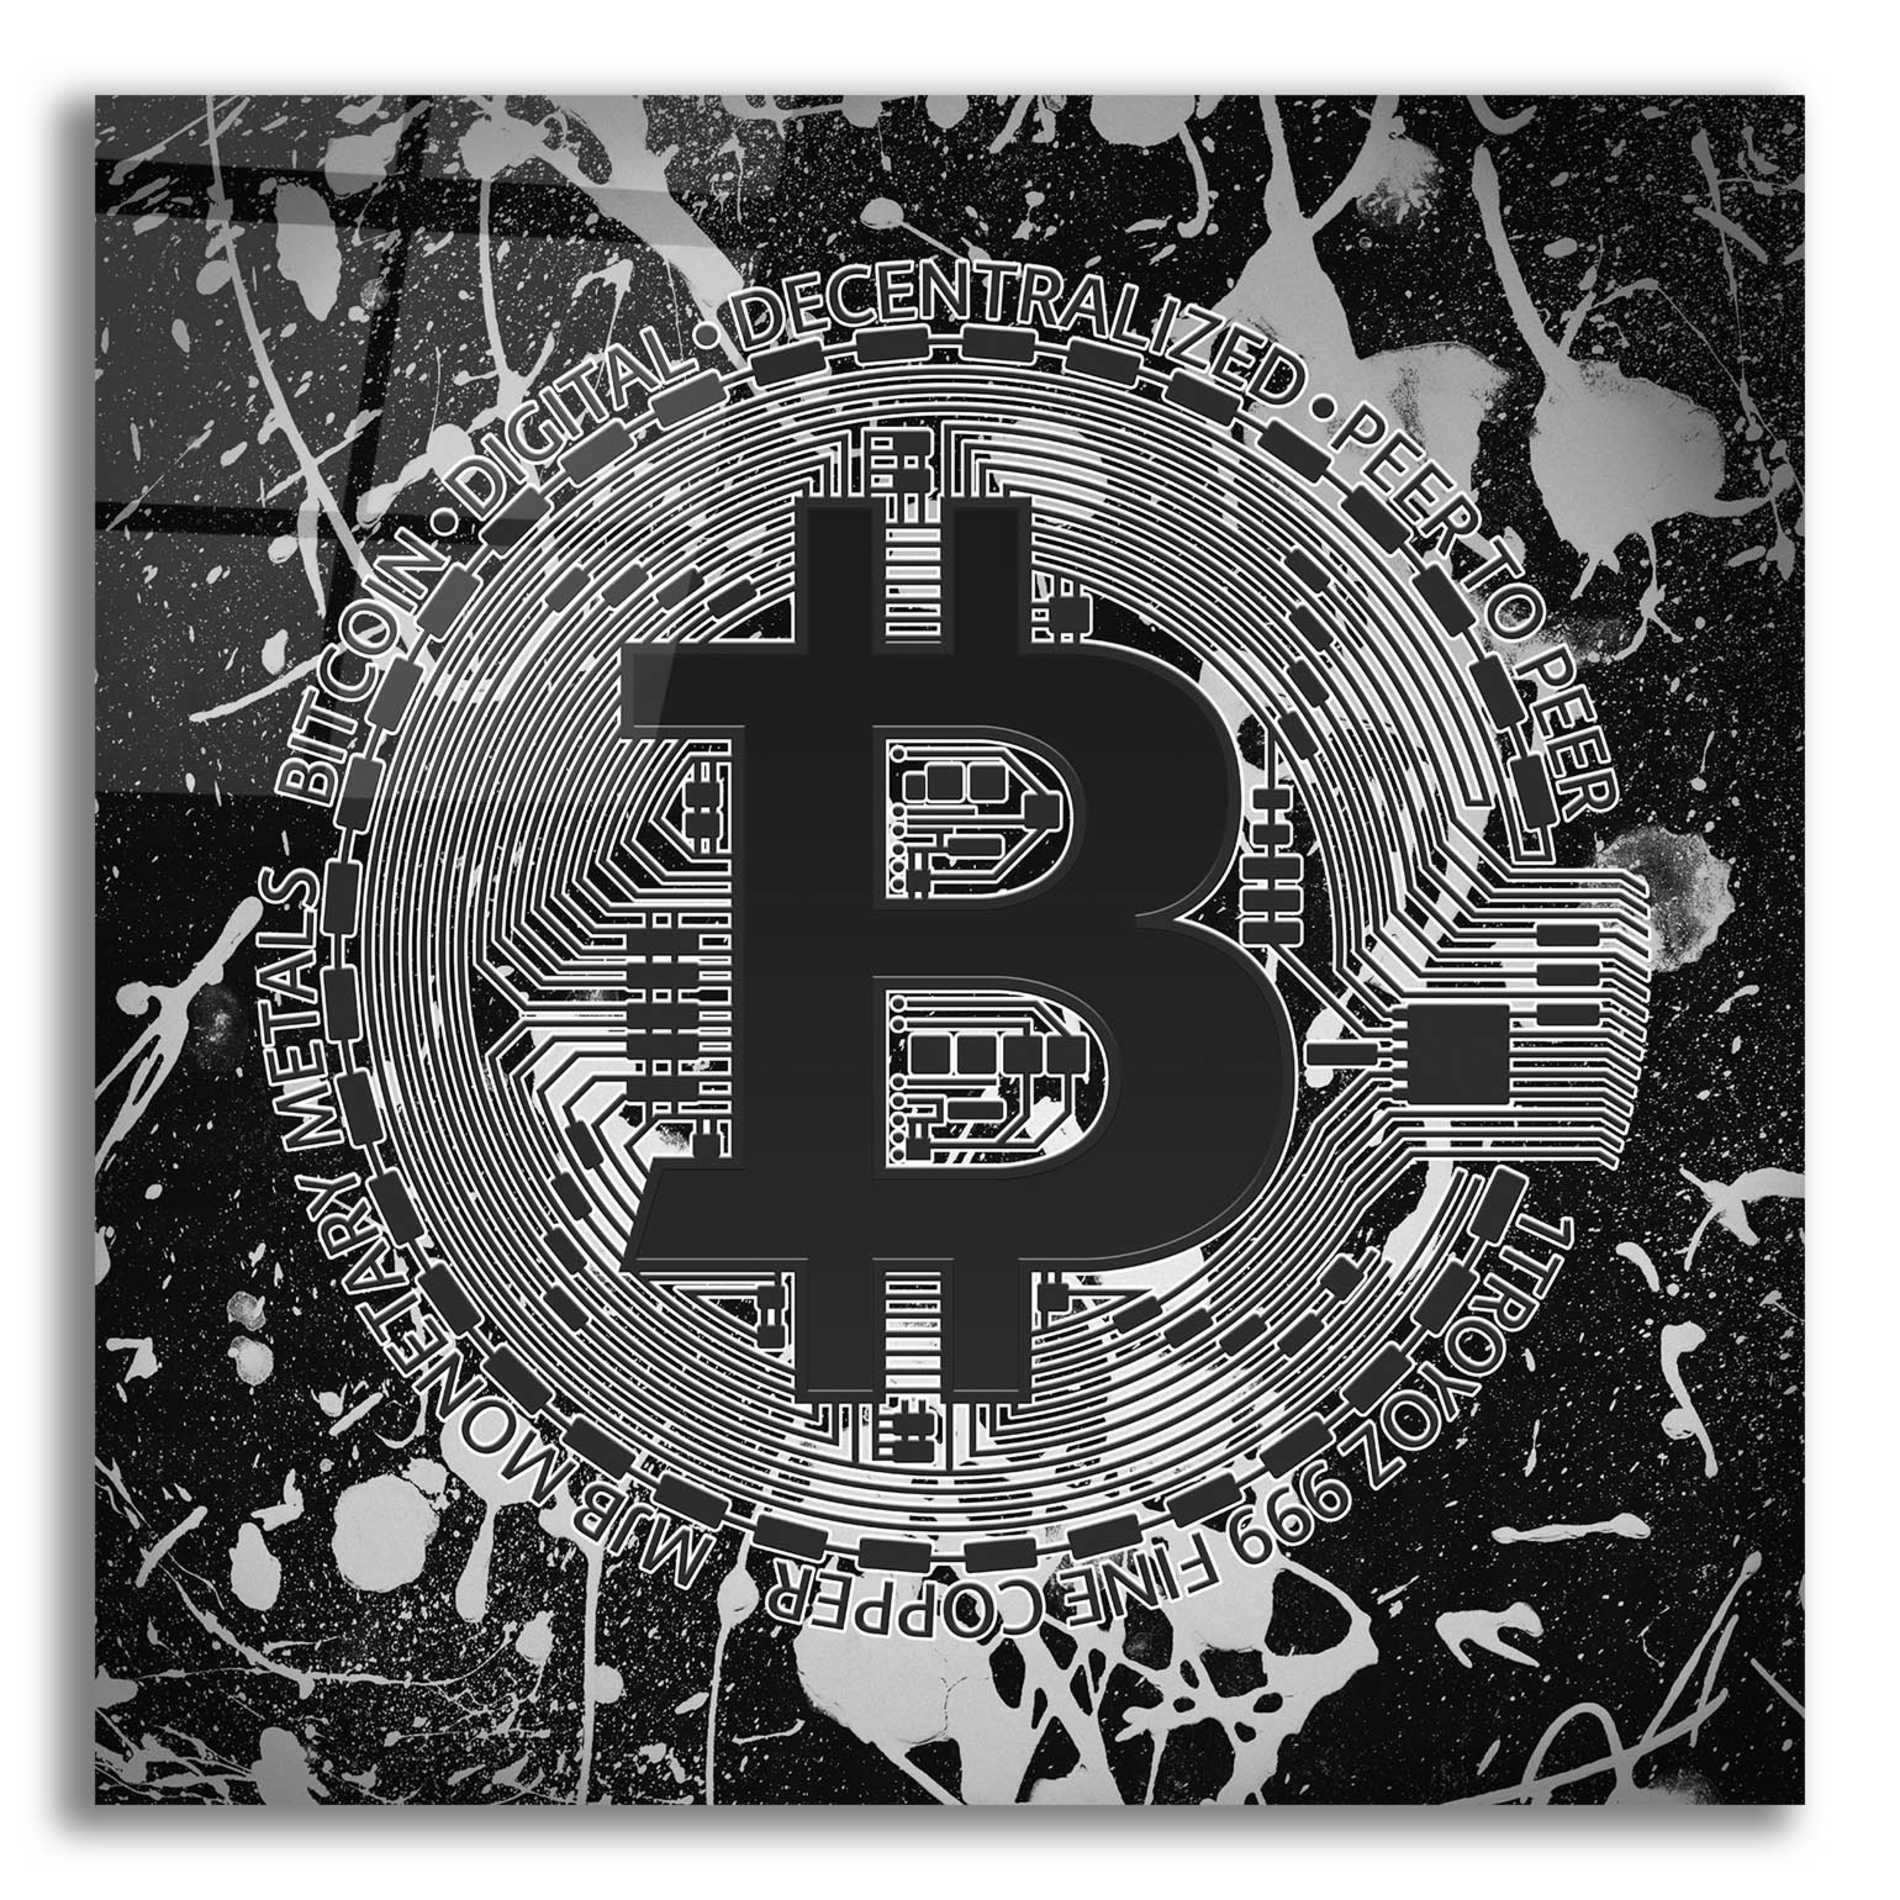 Epic Art 'Bitcoin Black Ice' by Cameron Gray Acrylic Glass Wall Art,12x12